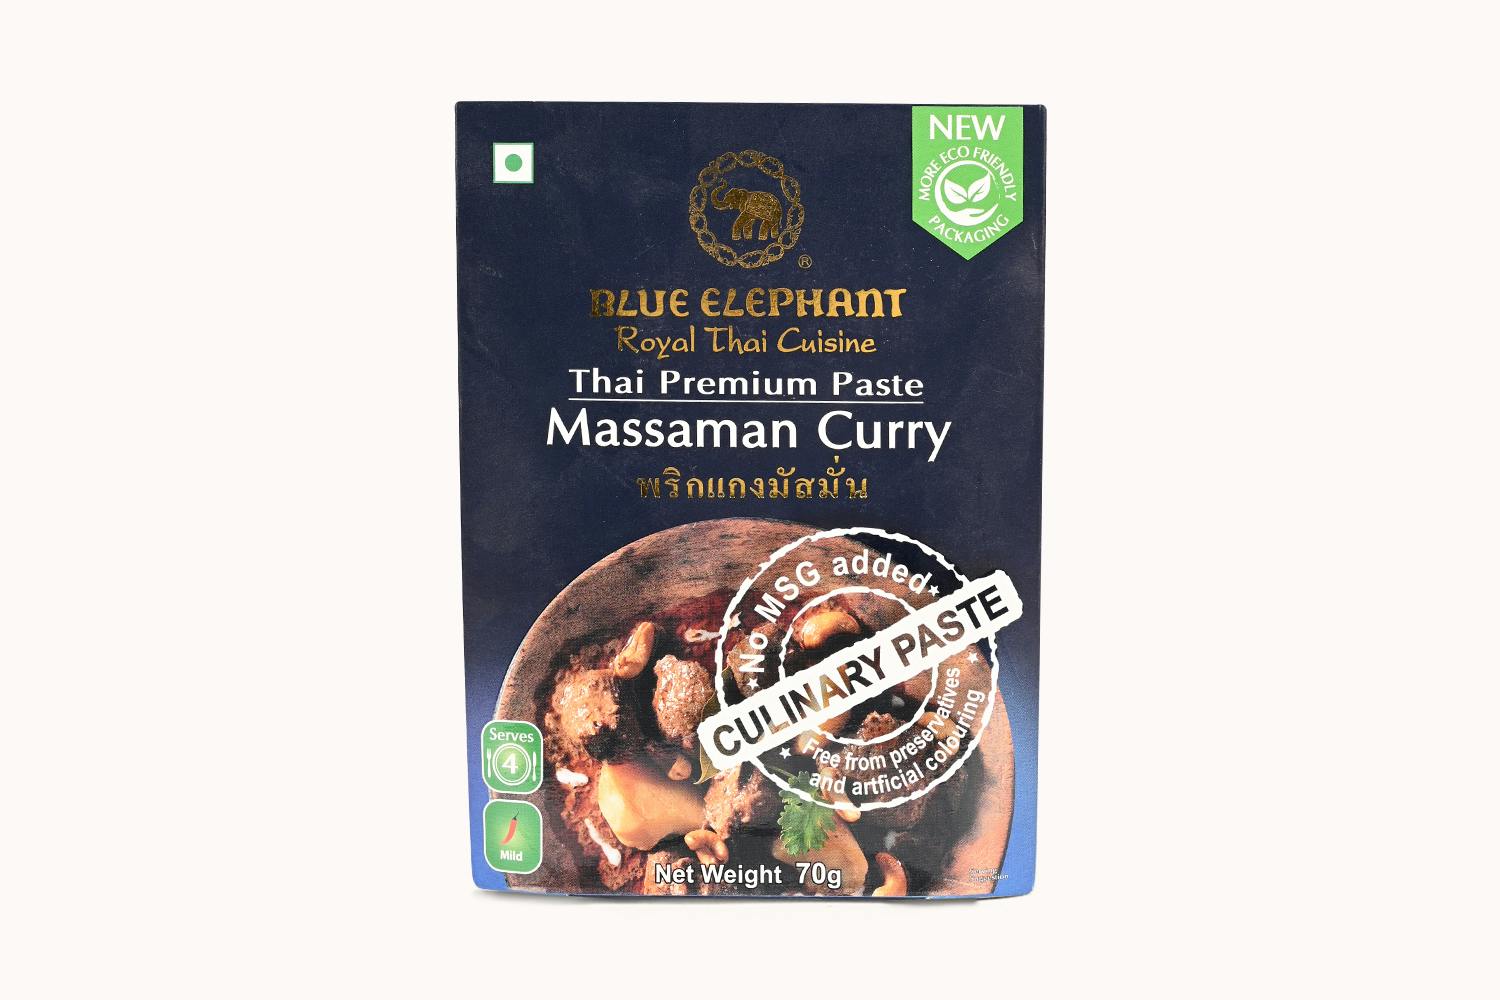 Blue Elephant Massaman Curry Paste